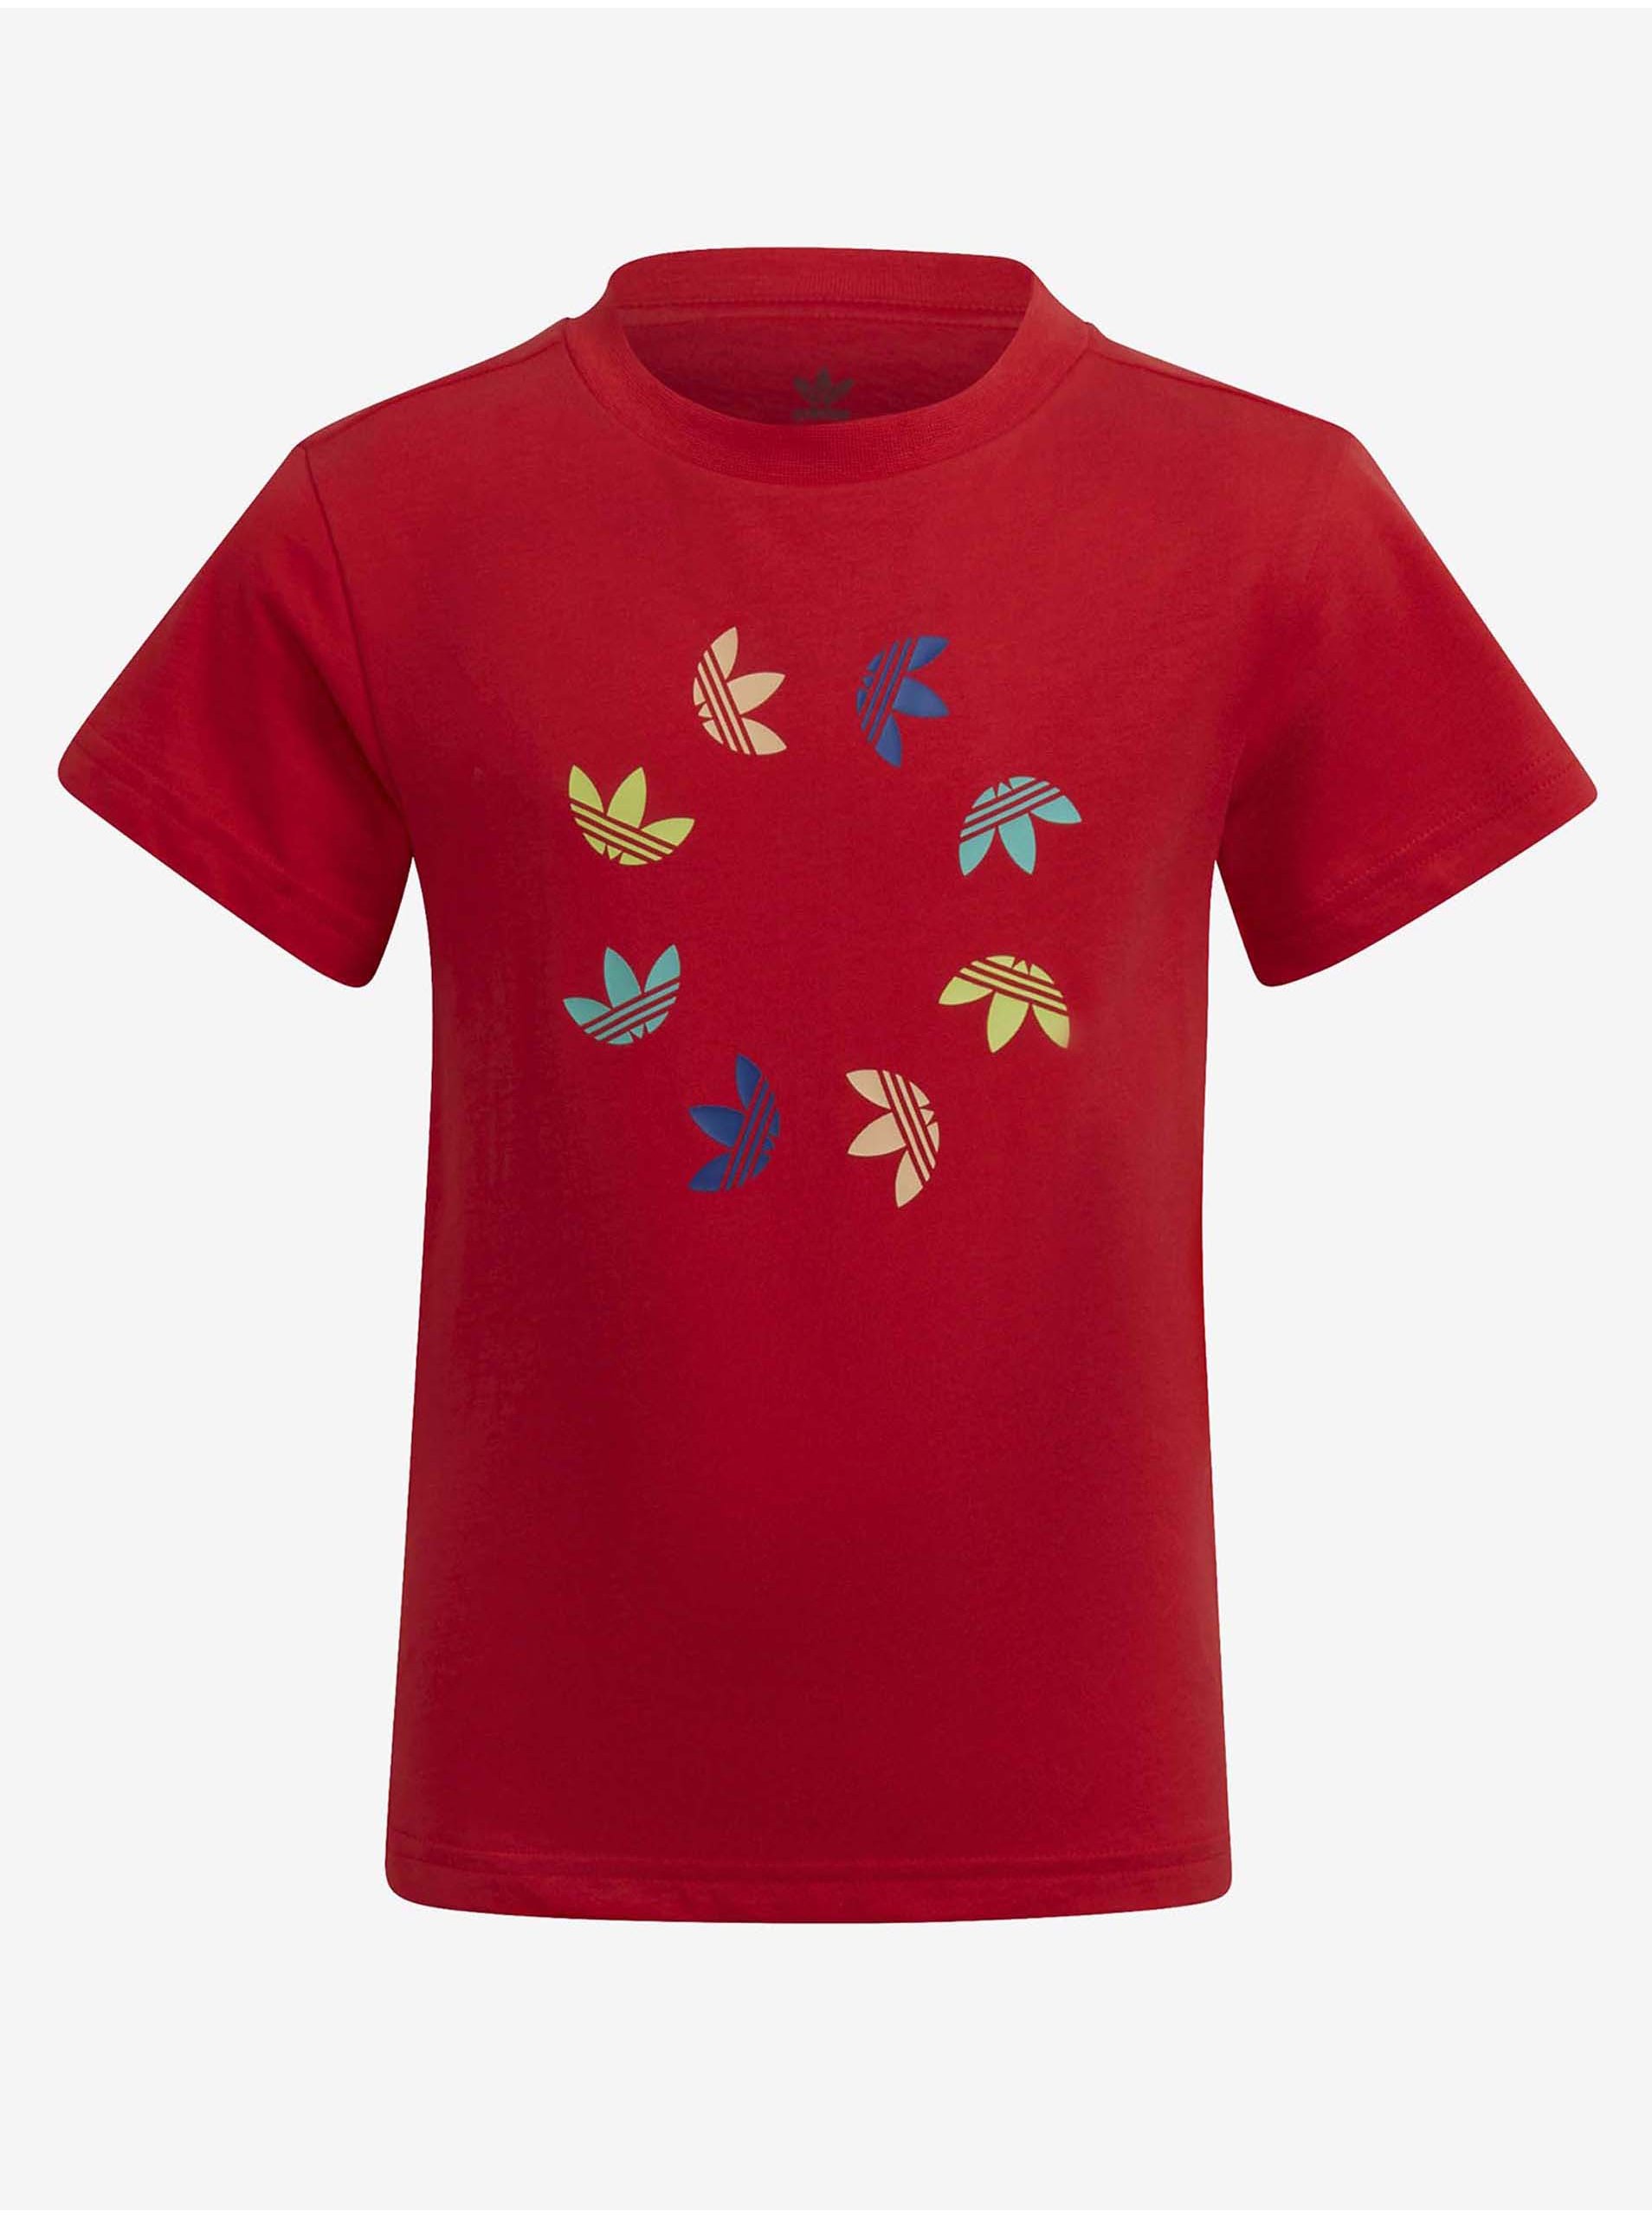 Red Kids T-Shirt adidas Originals - unisex